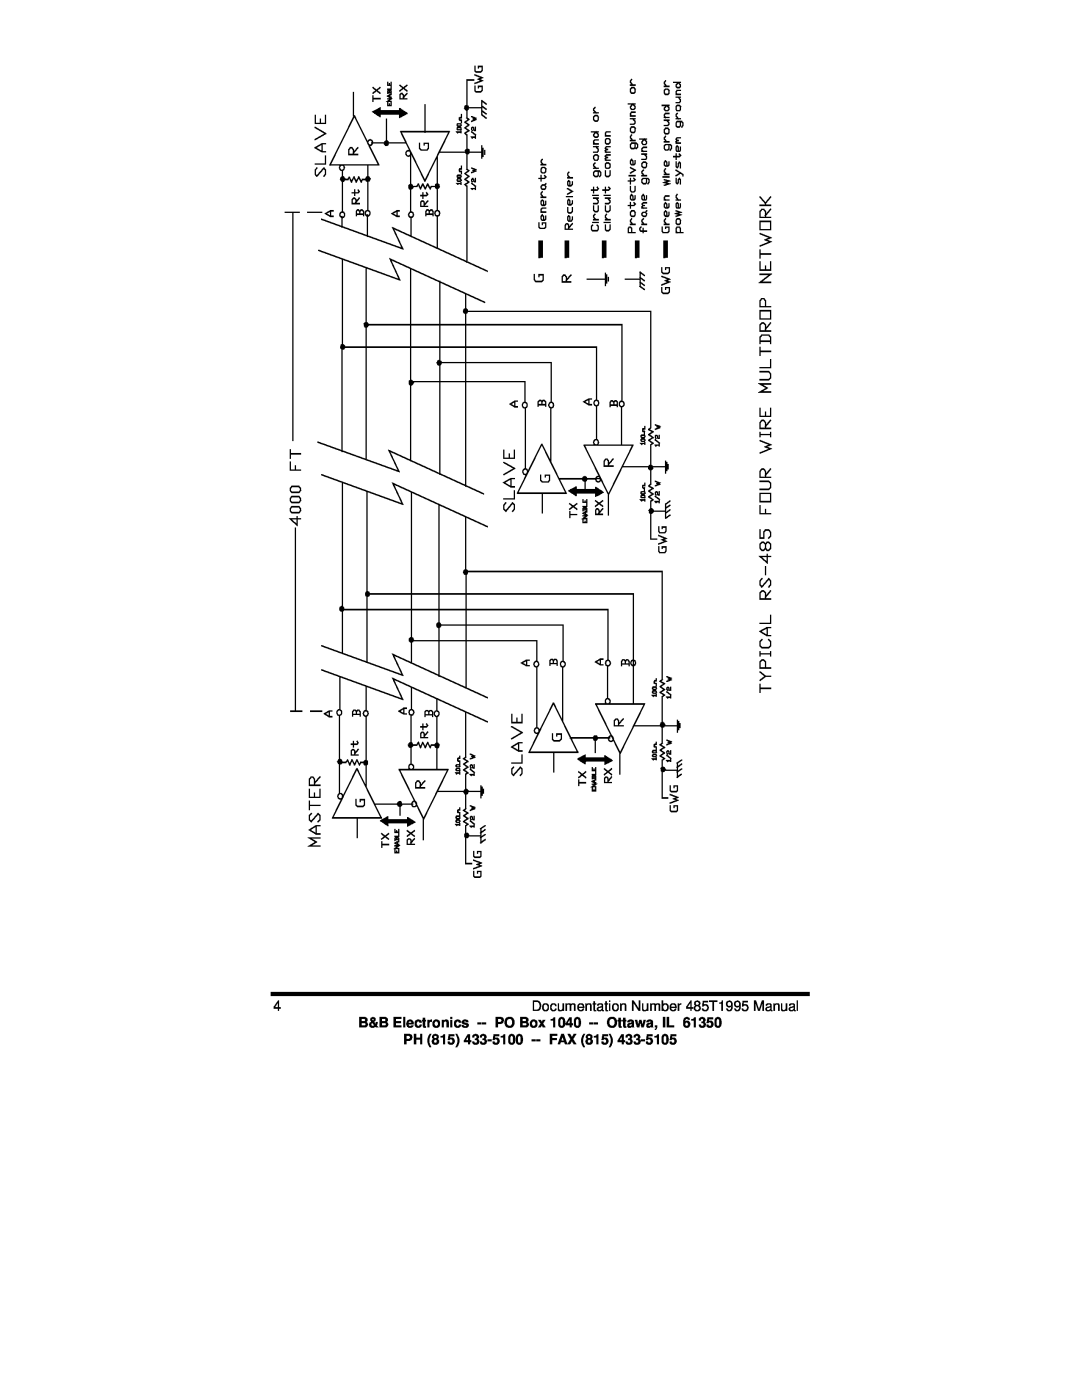 B&B Electronics manual 4Documentation Number 485T1995 Manual, B&B Electronics -- PO Box 1040 -- Ottawa, IL 